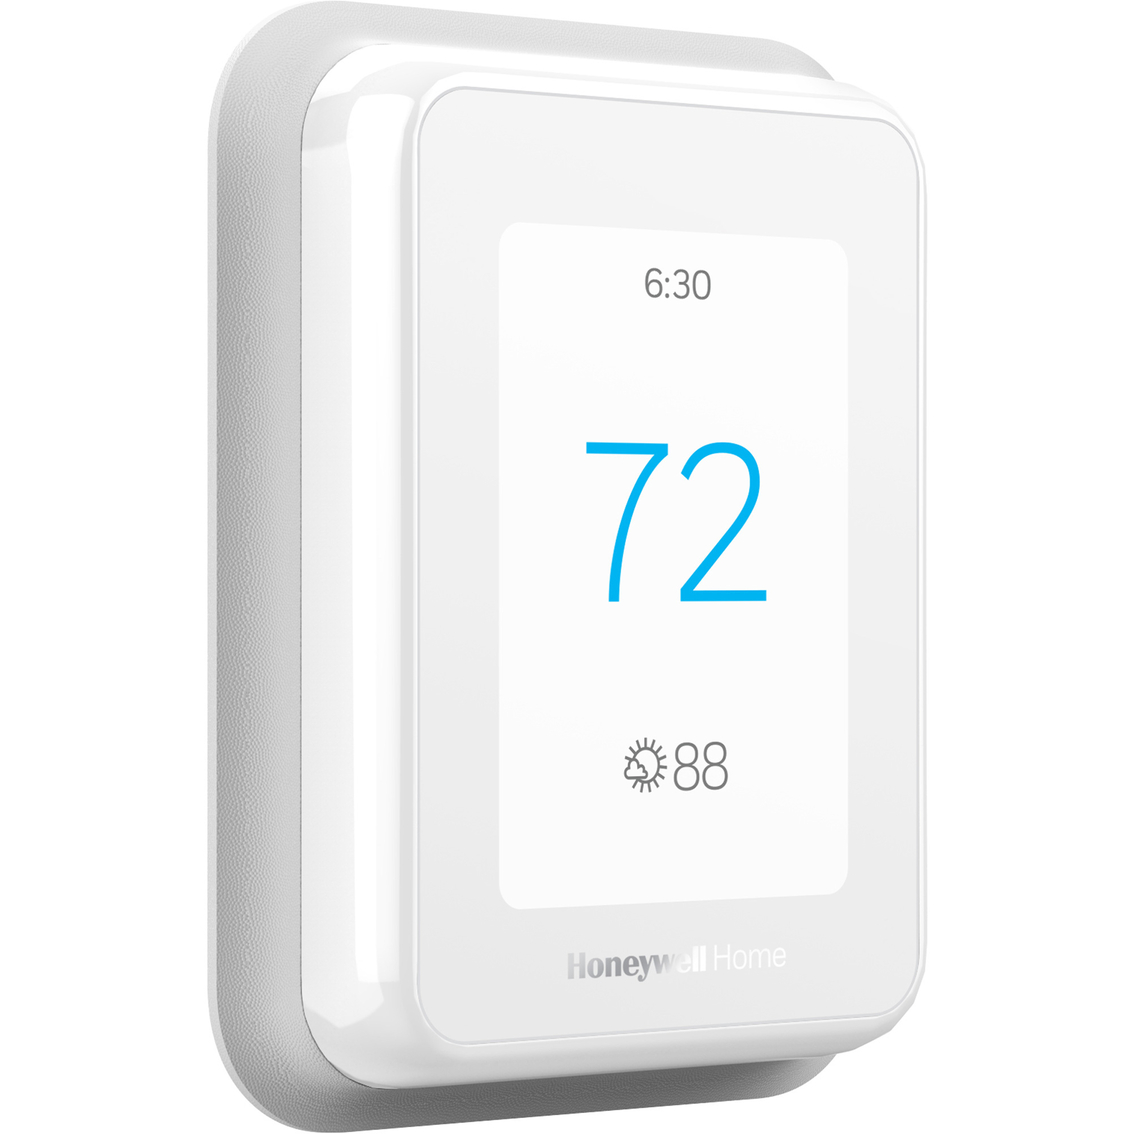 Honeywell T9 Smart Thermostat - Image 2 of 8